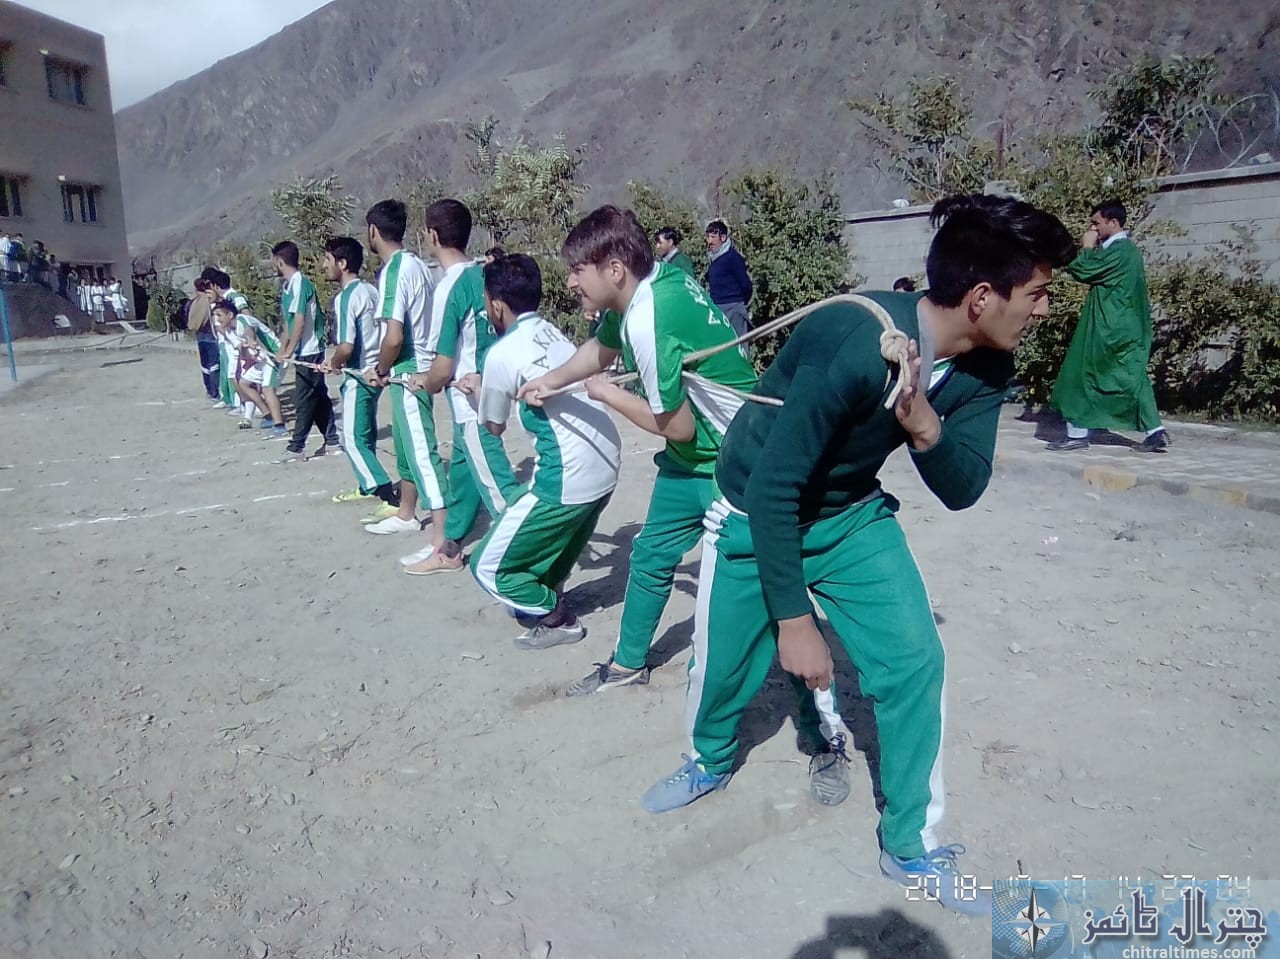 aga khan school sports gala concluded 9